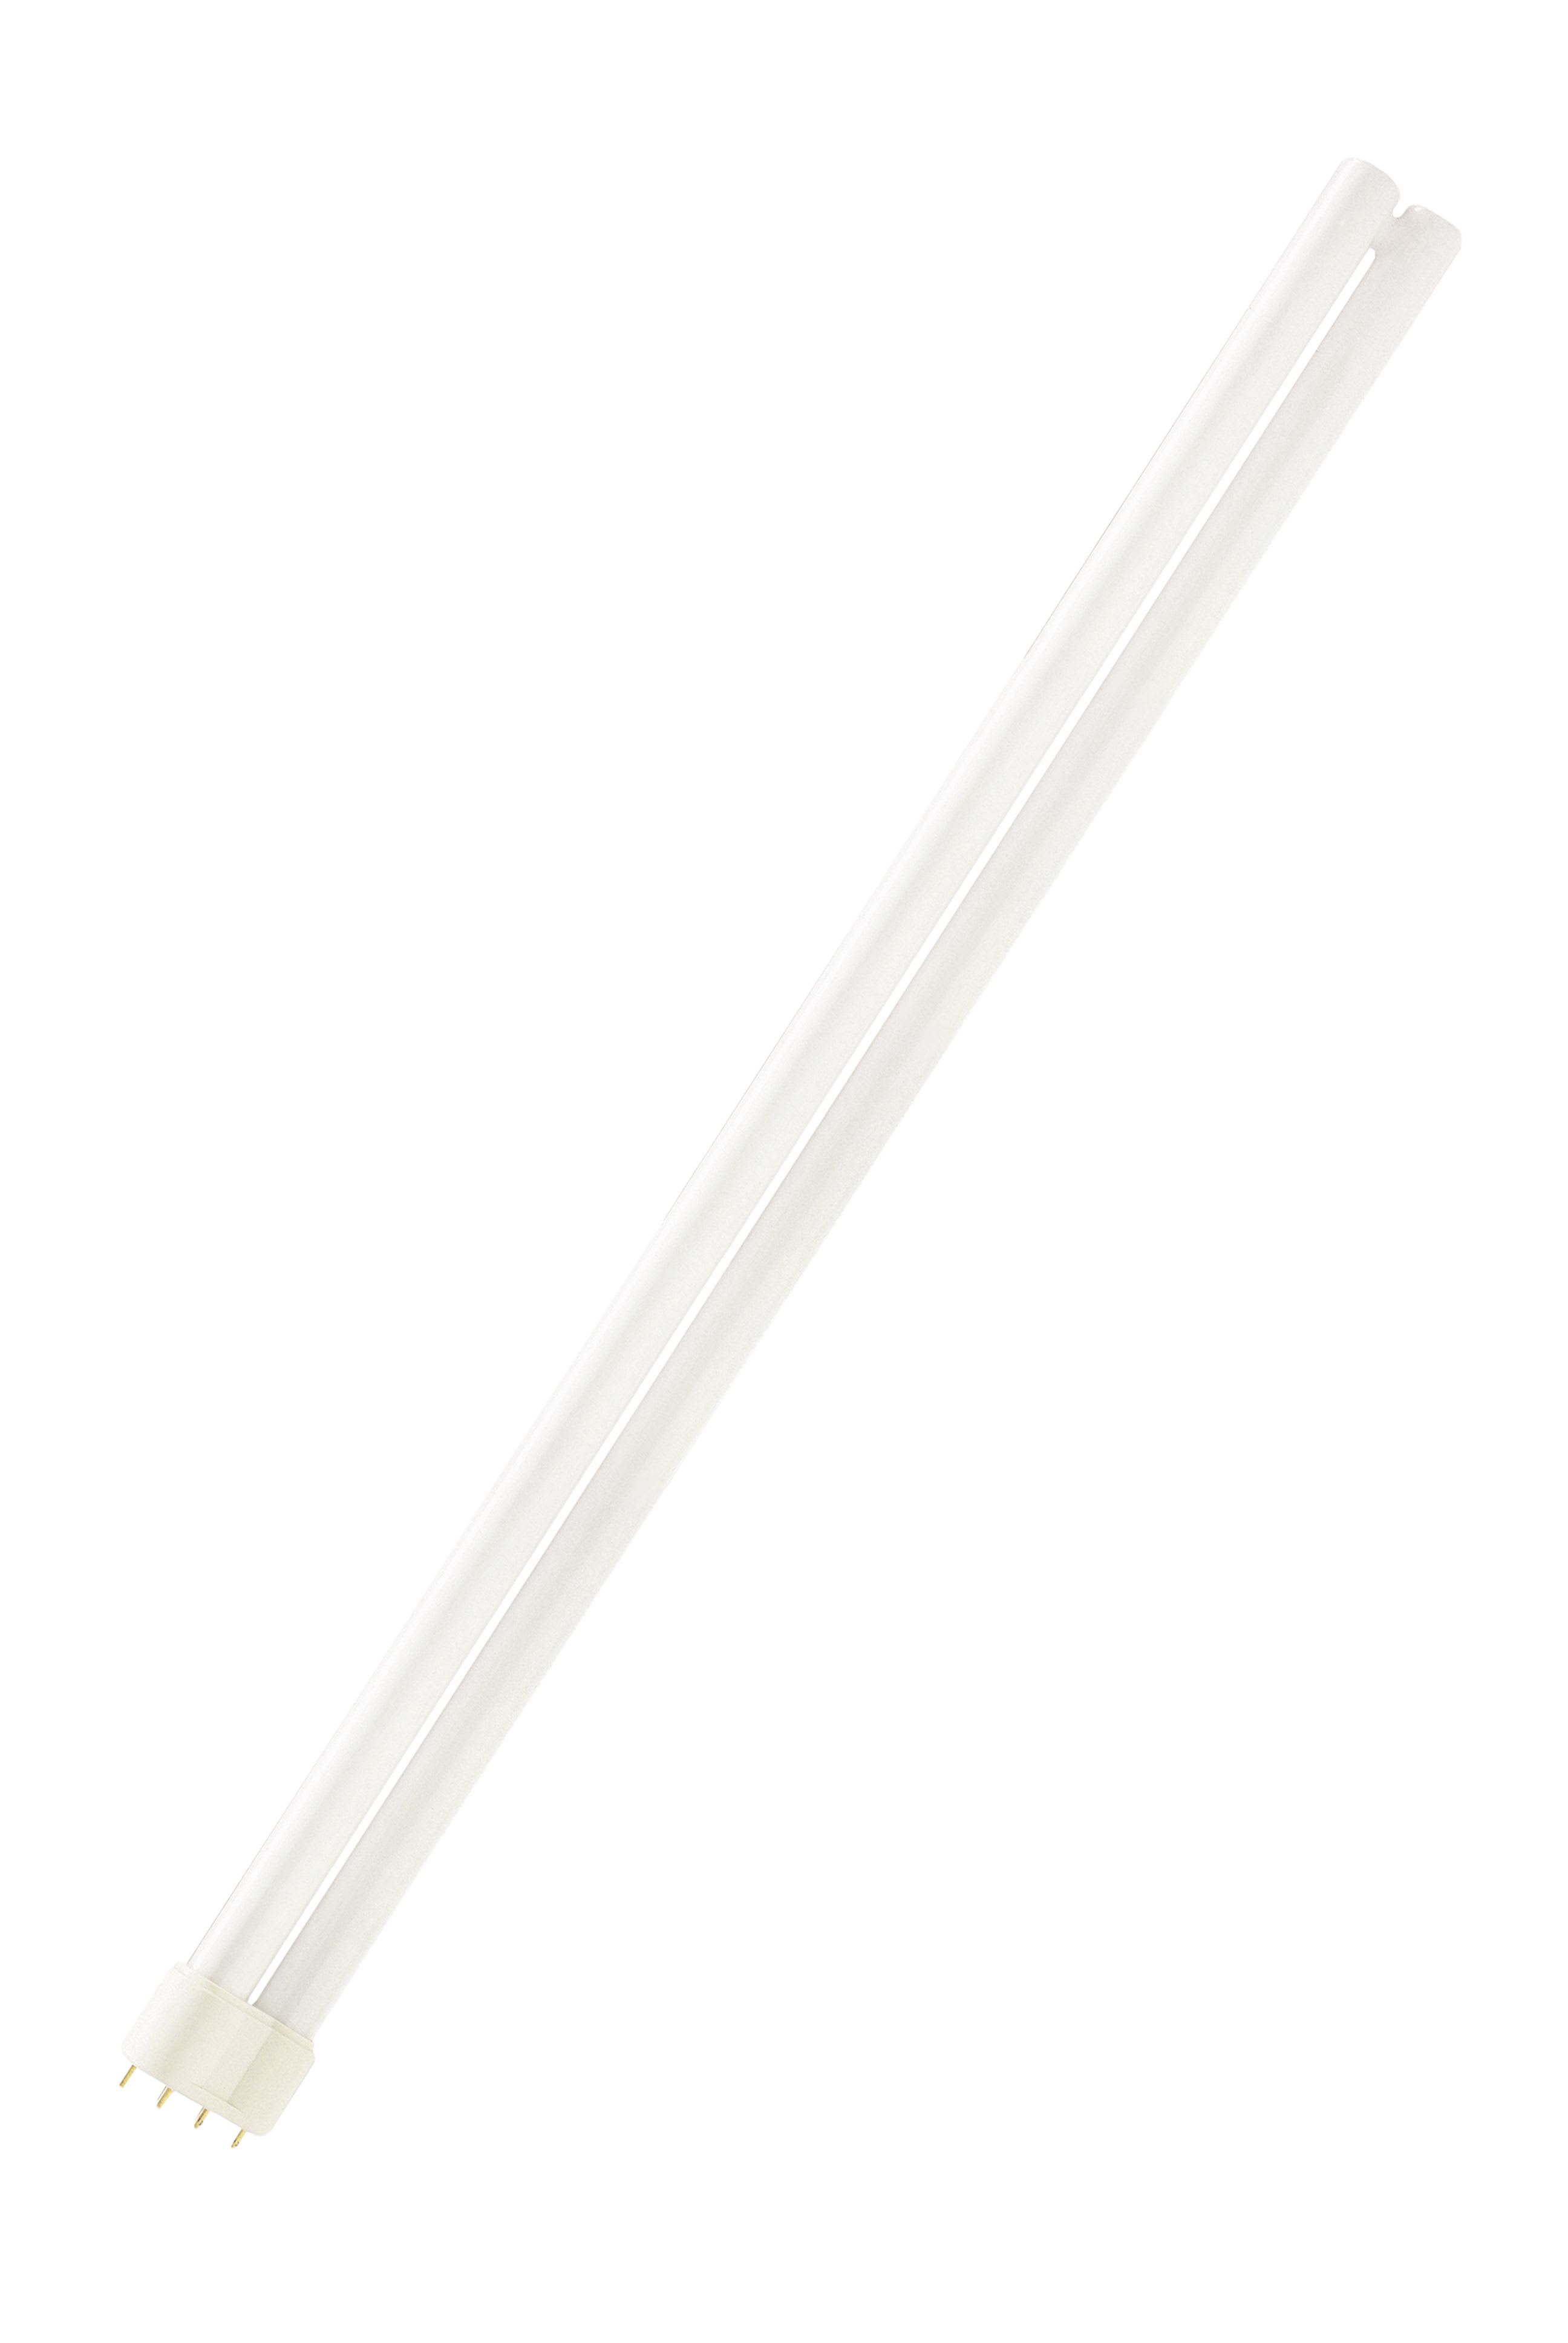 Bailey - PHI MASTER PL-L 2G11 4-pin 55W/830 3000K 18x535mm Lampe fluorescente compacte